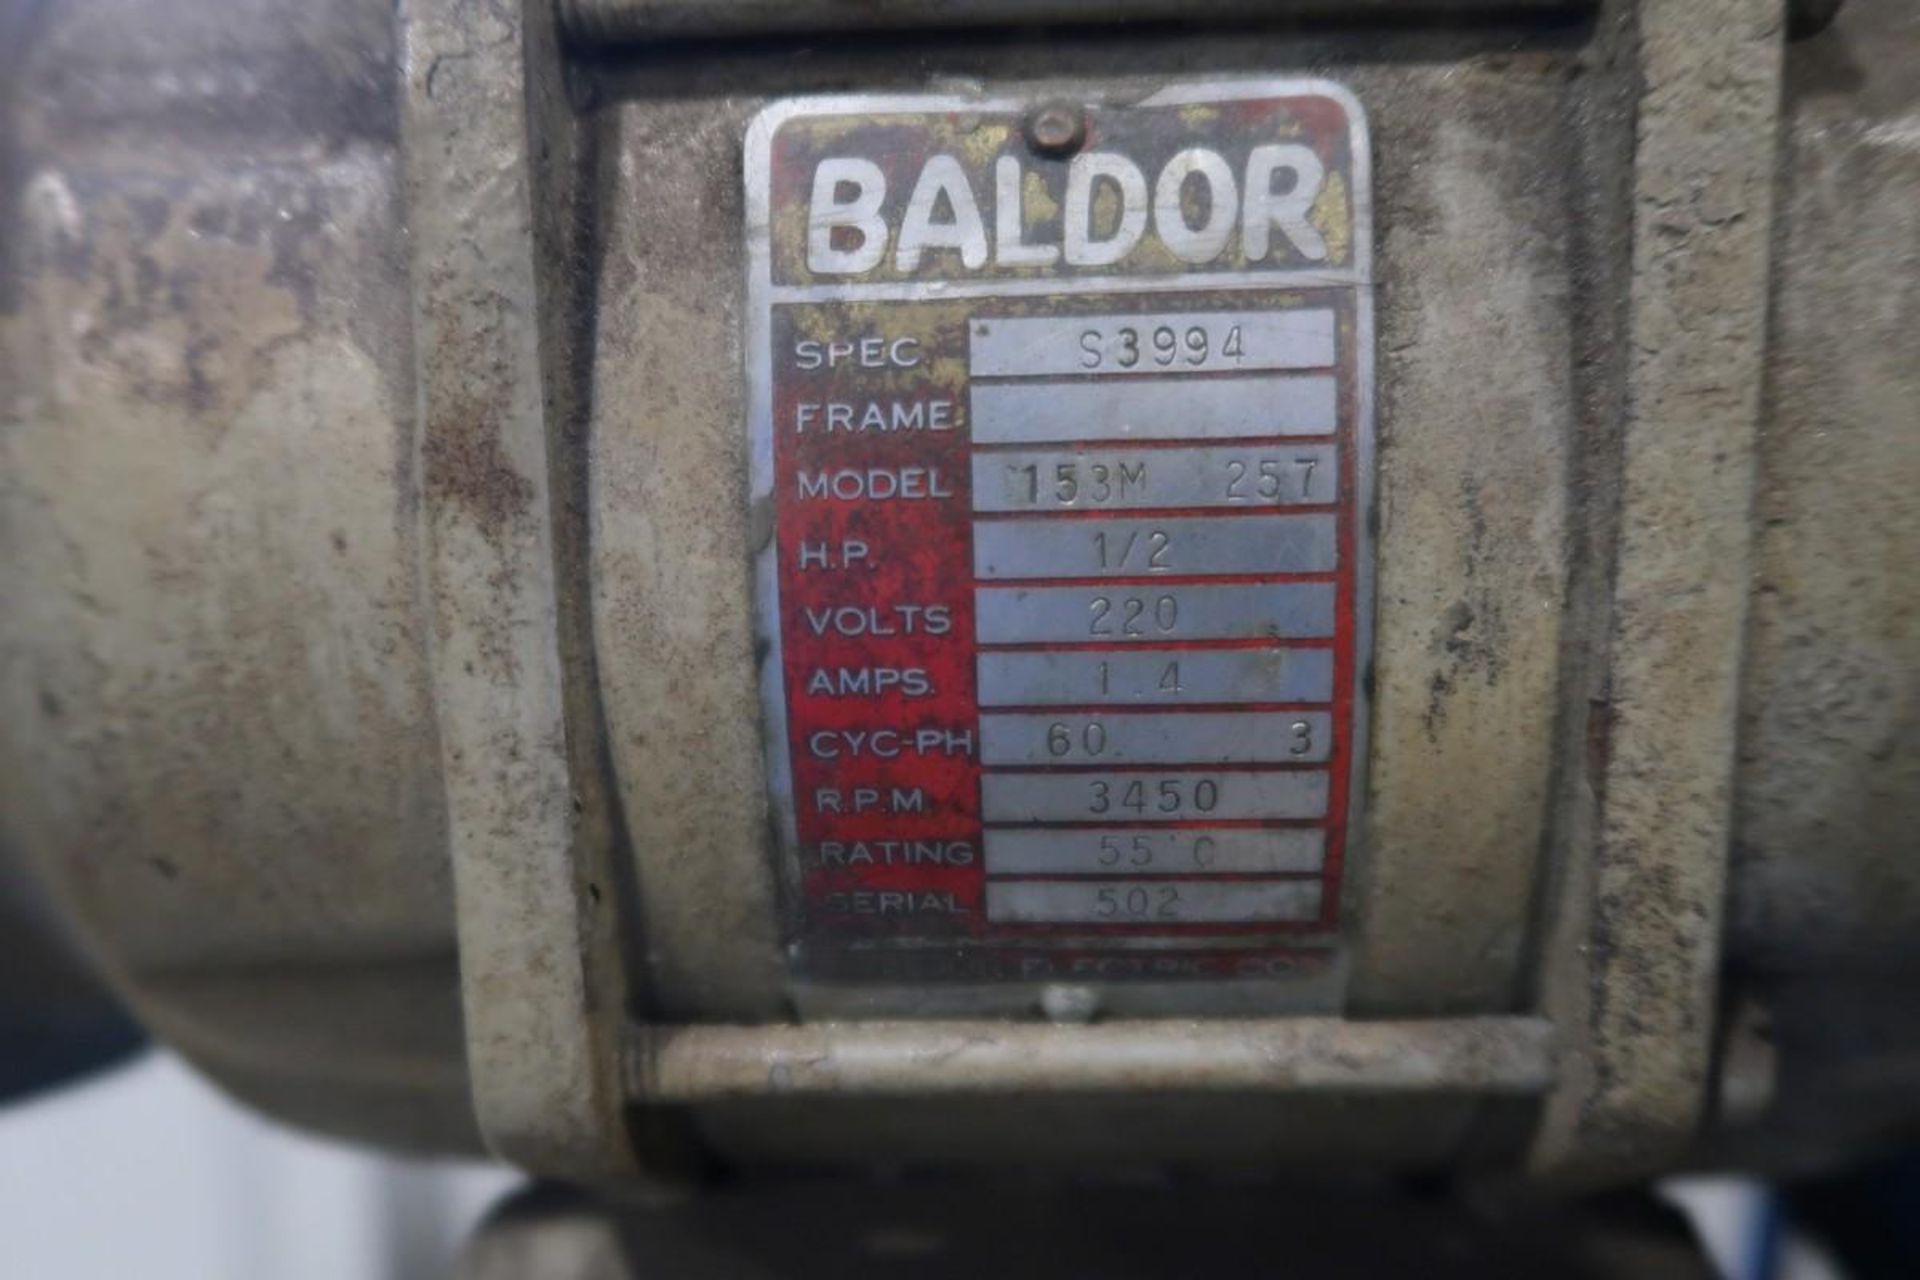 Baldor 153M 257 6" Tool Grinder - Image 4 of 4